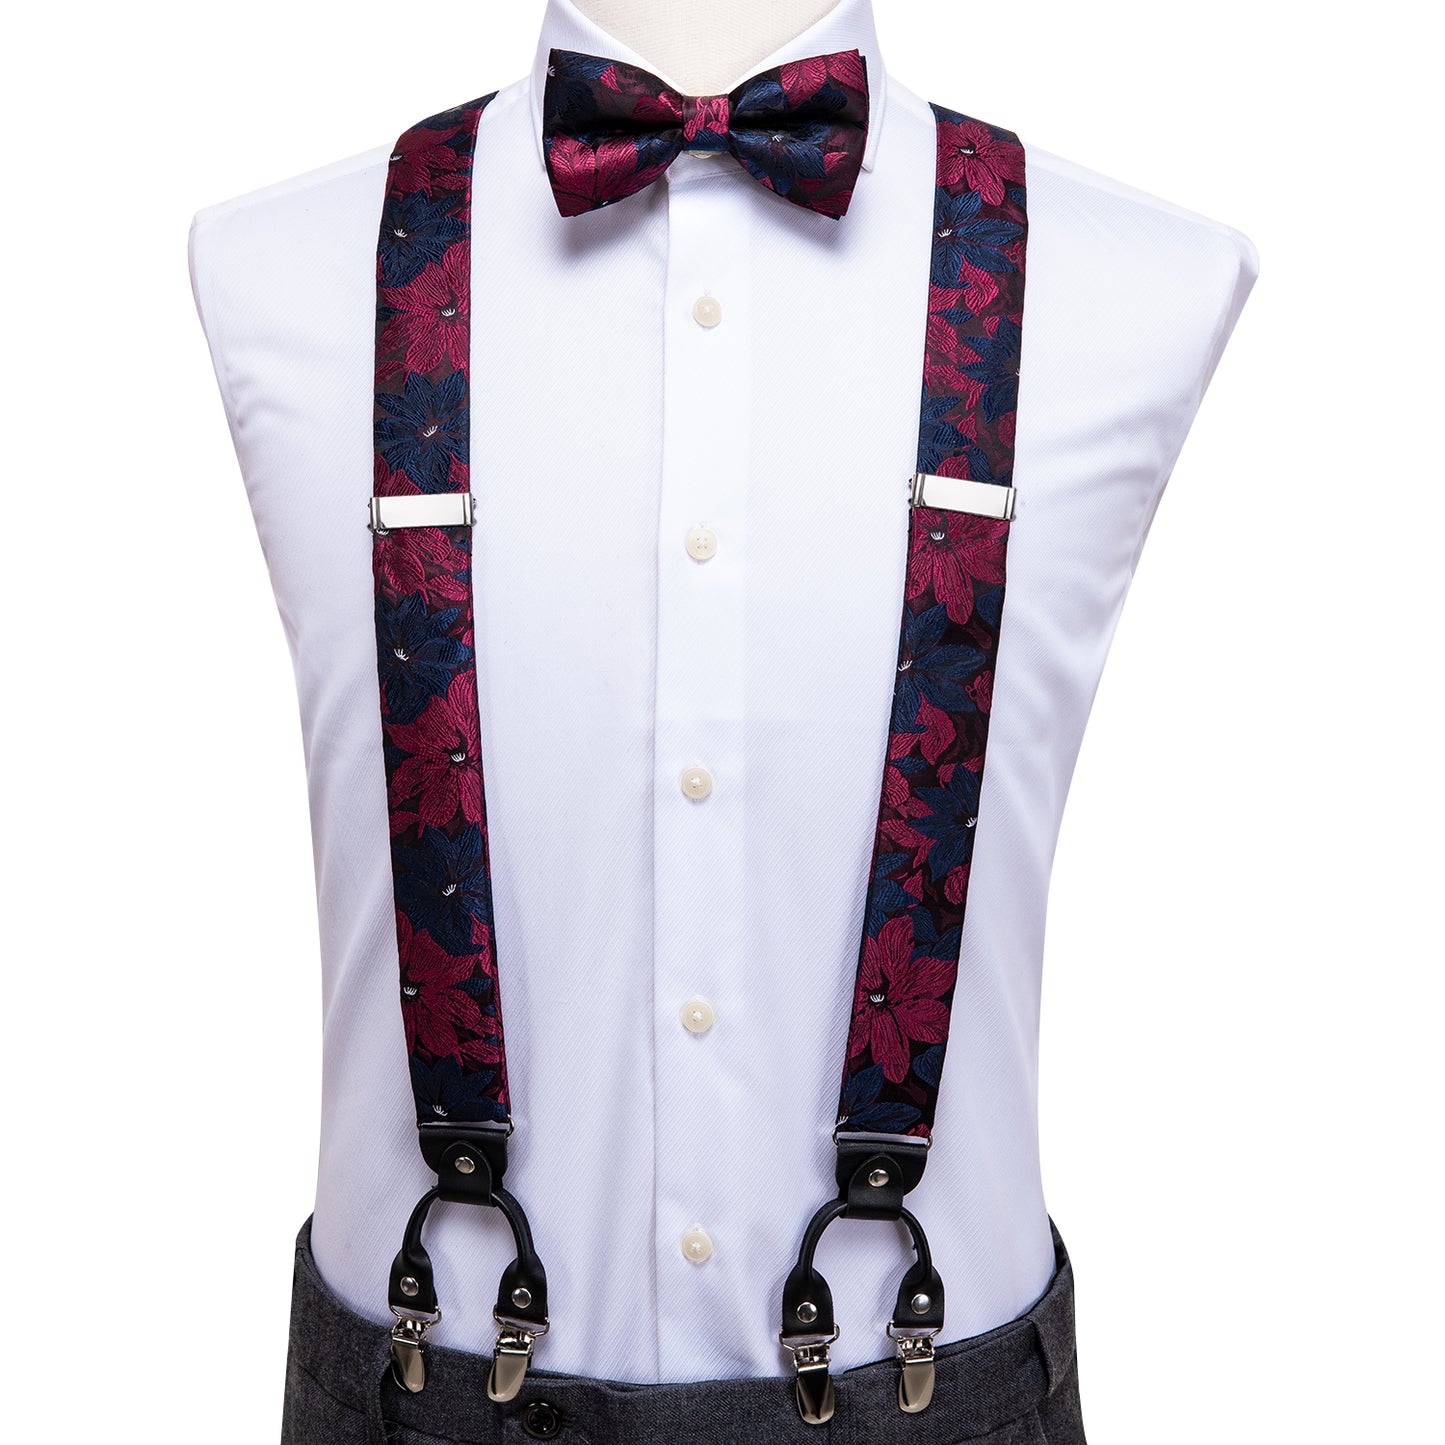 BD3038 Men's Braces Designer Clip Suspender Set [Purple Blue]